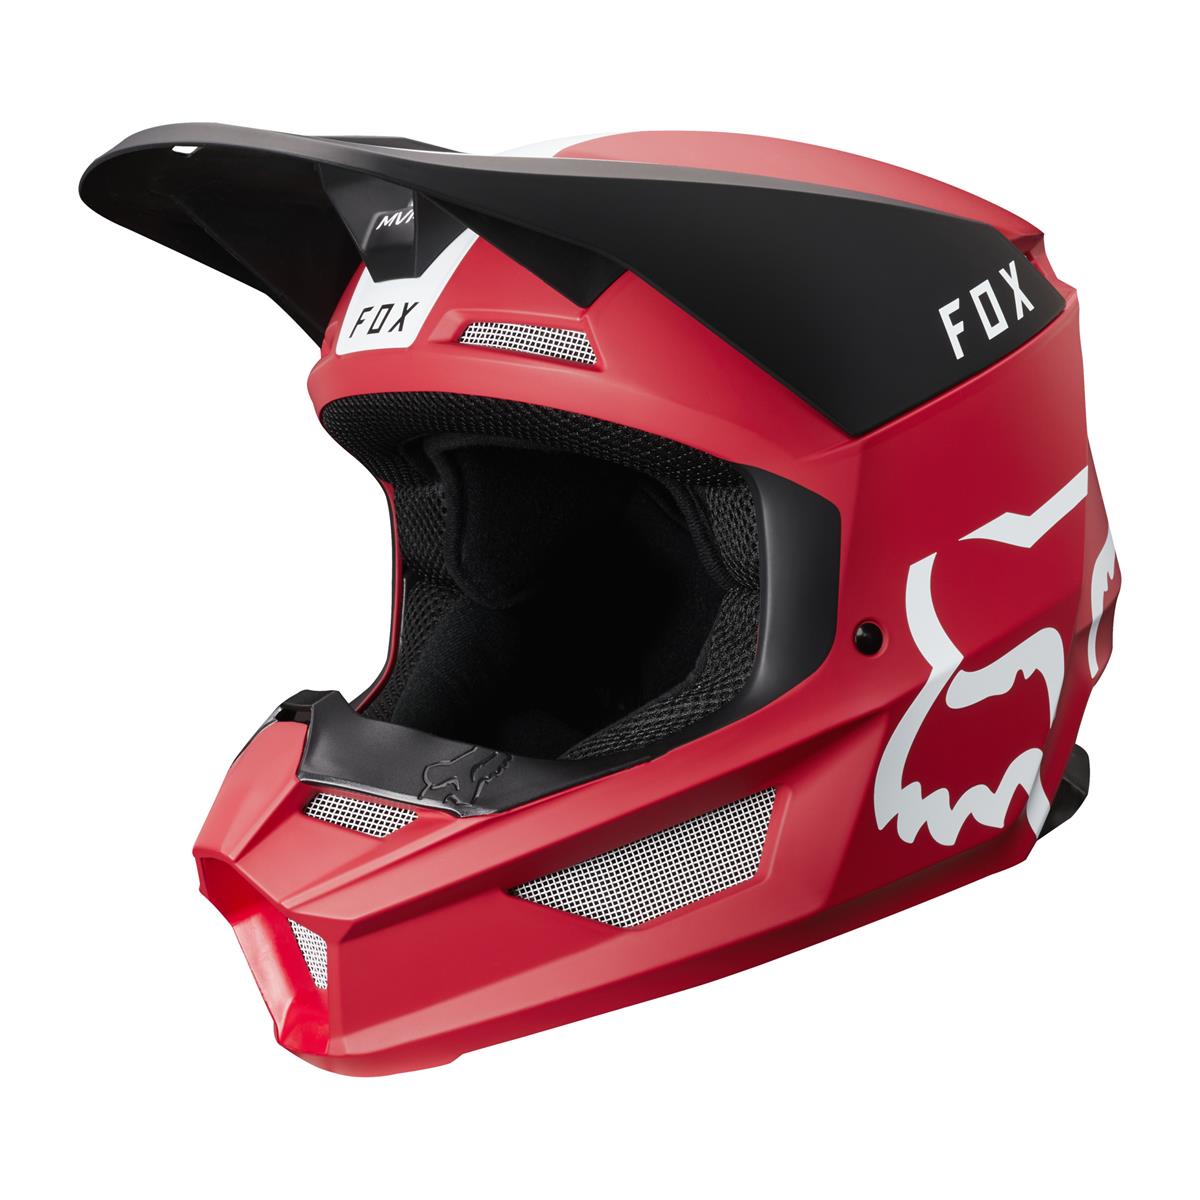 Fox Dirt Bike Helmet Sizing Chart